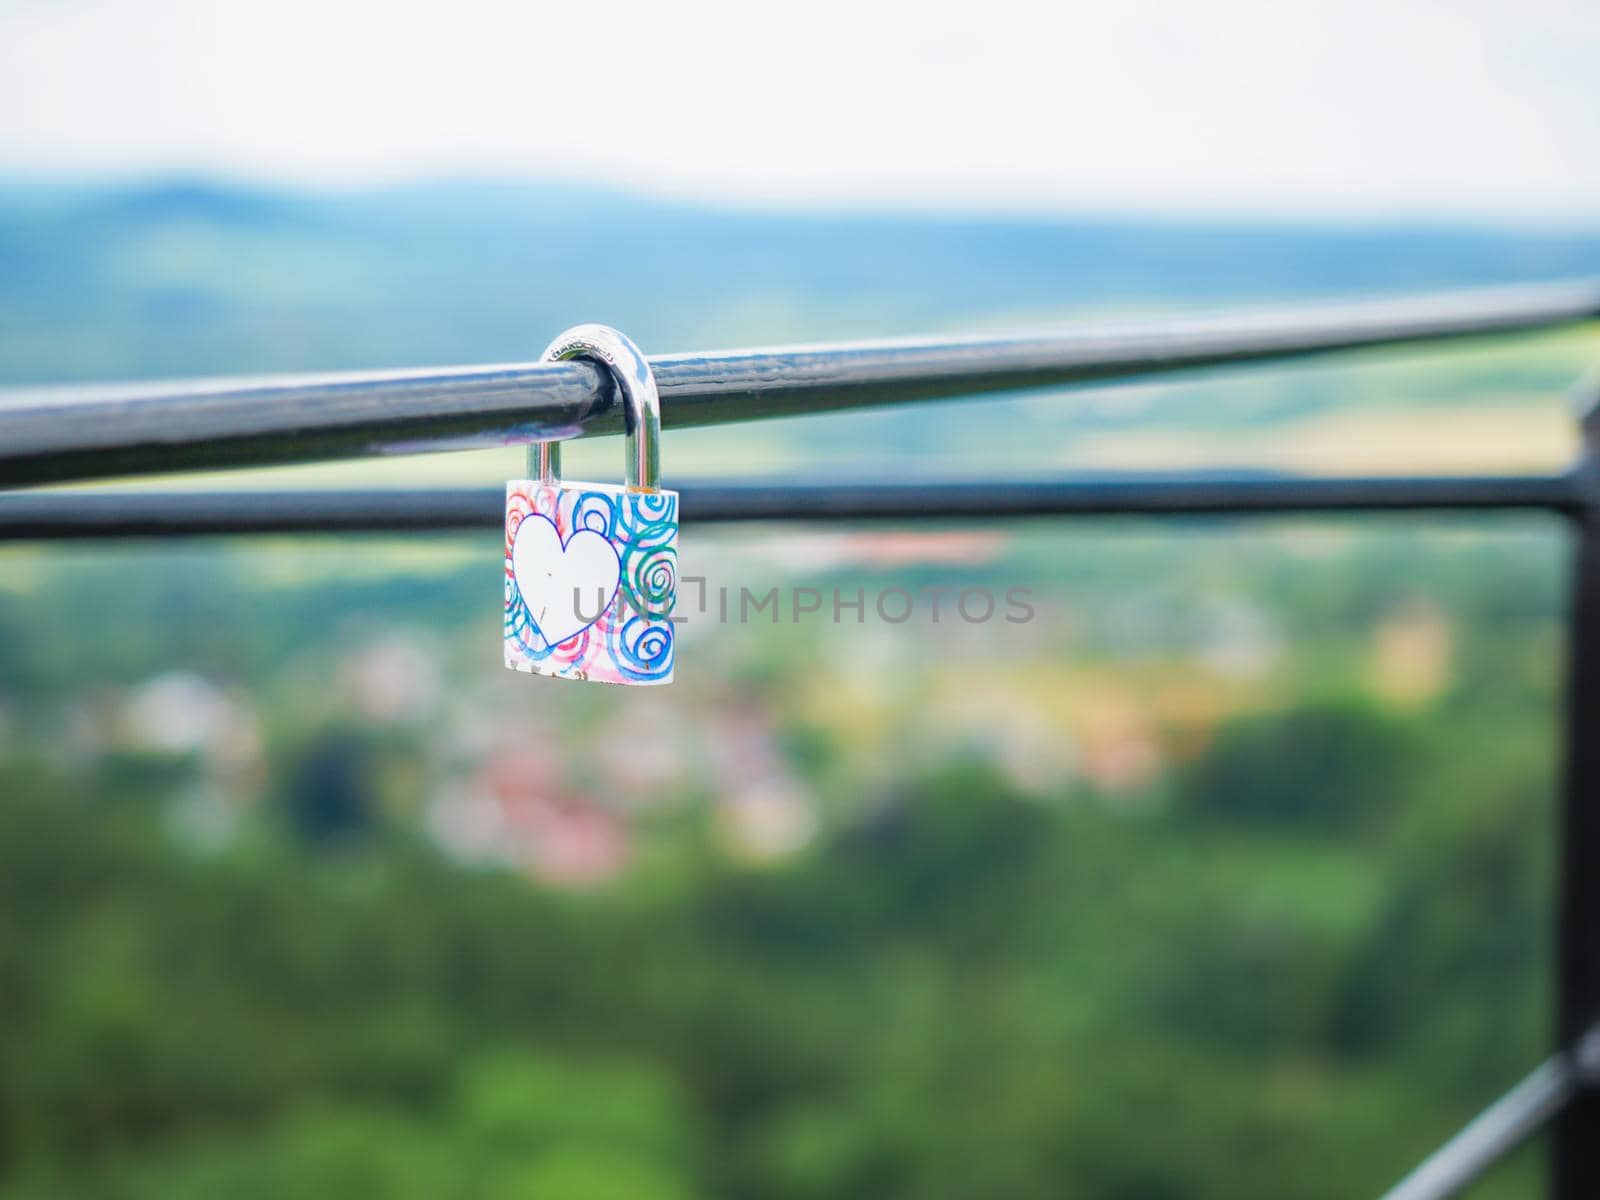 Locked lock hangs on the metal fence. Symbol of love in the park by rdonar2